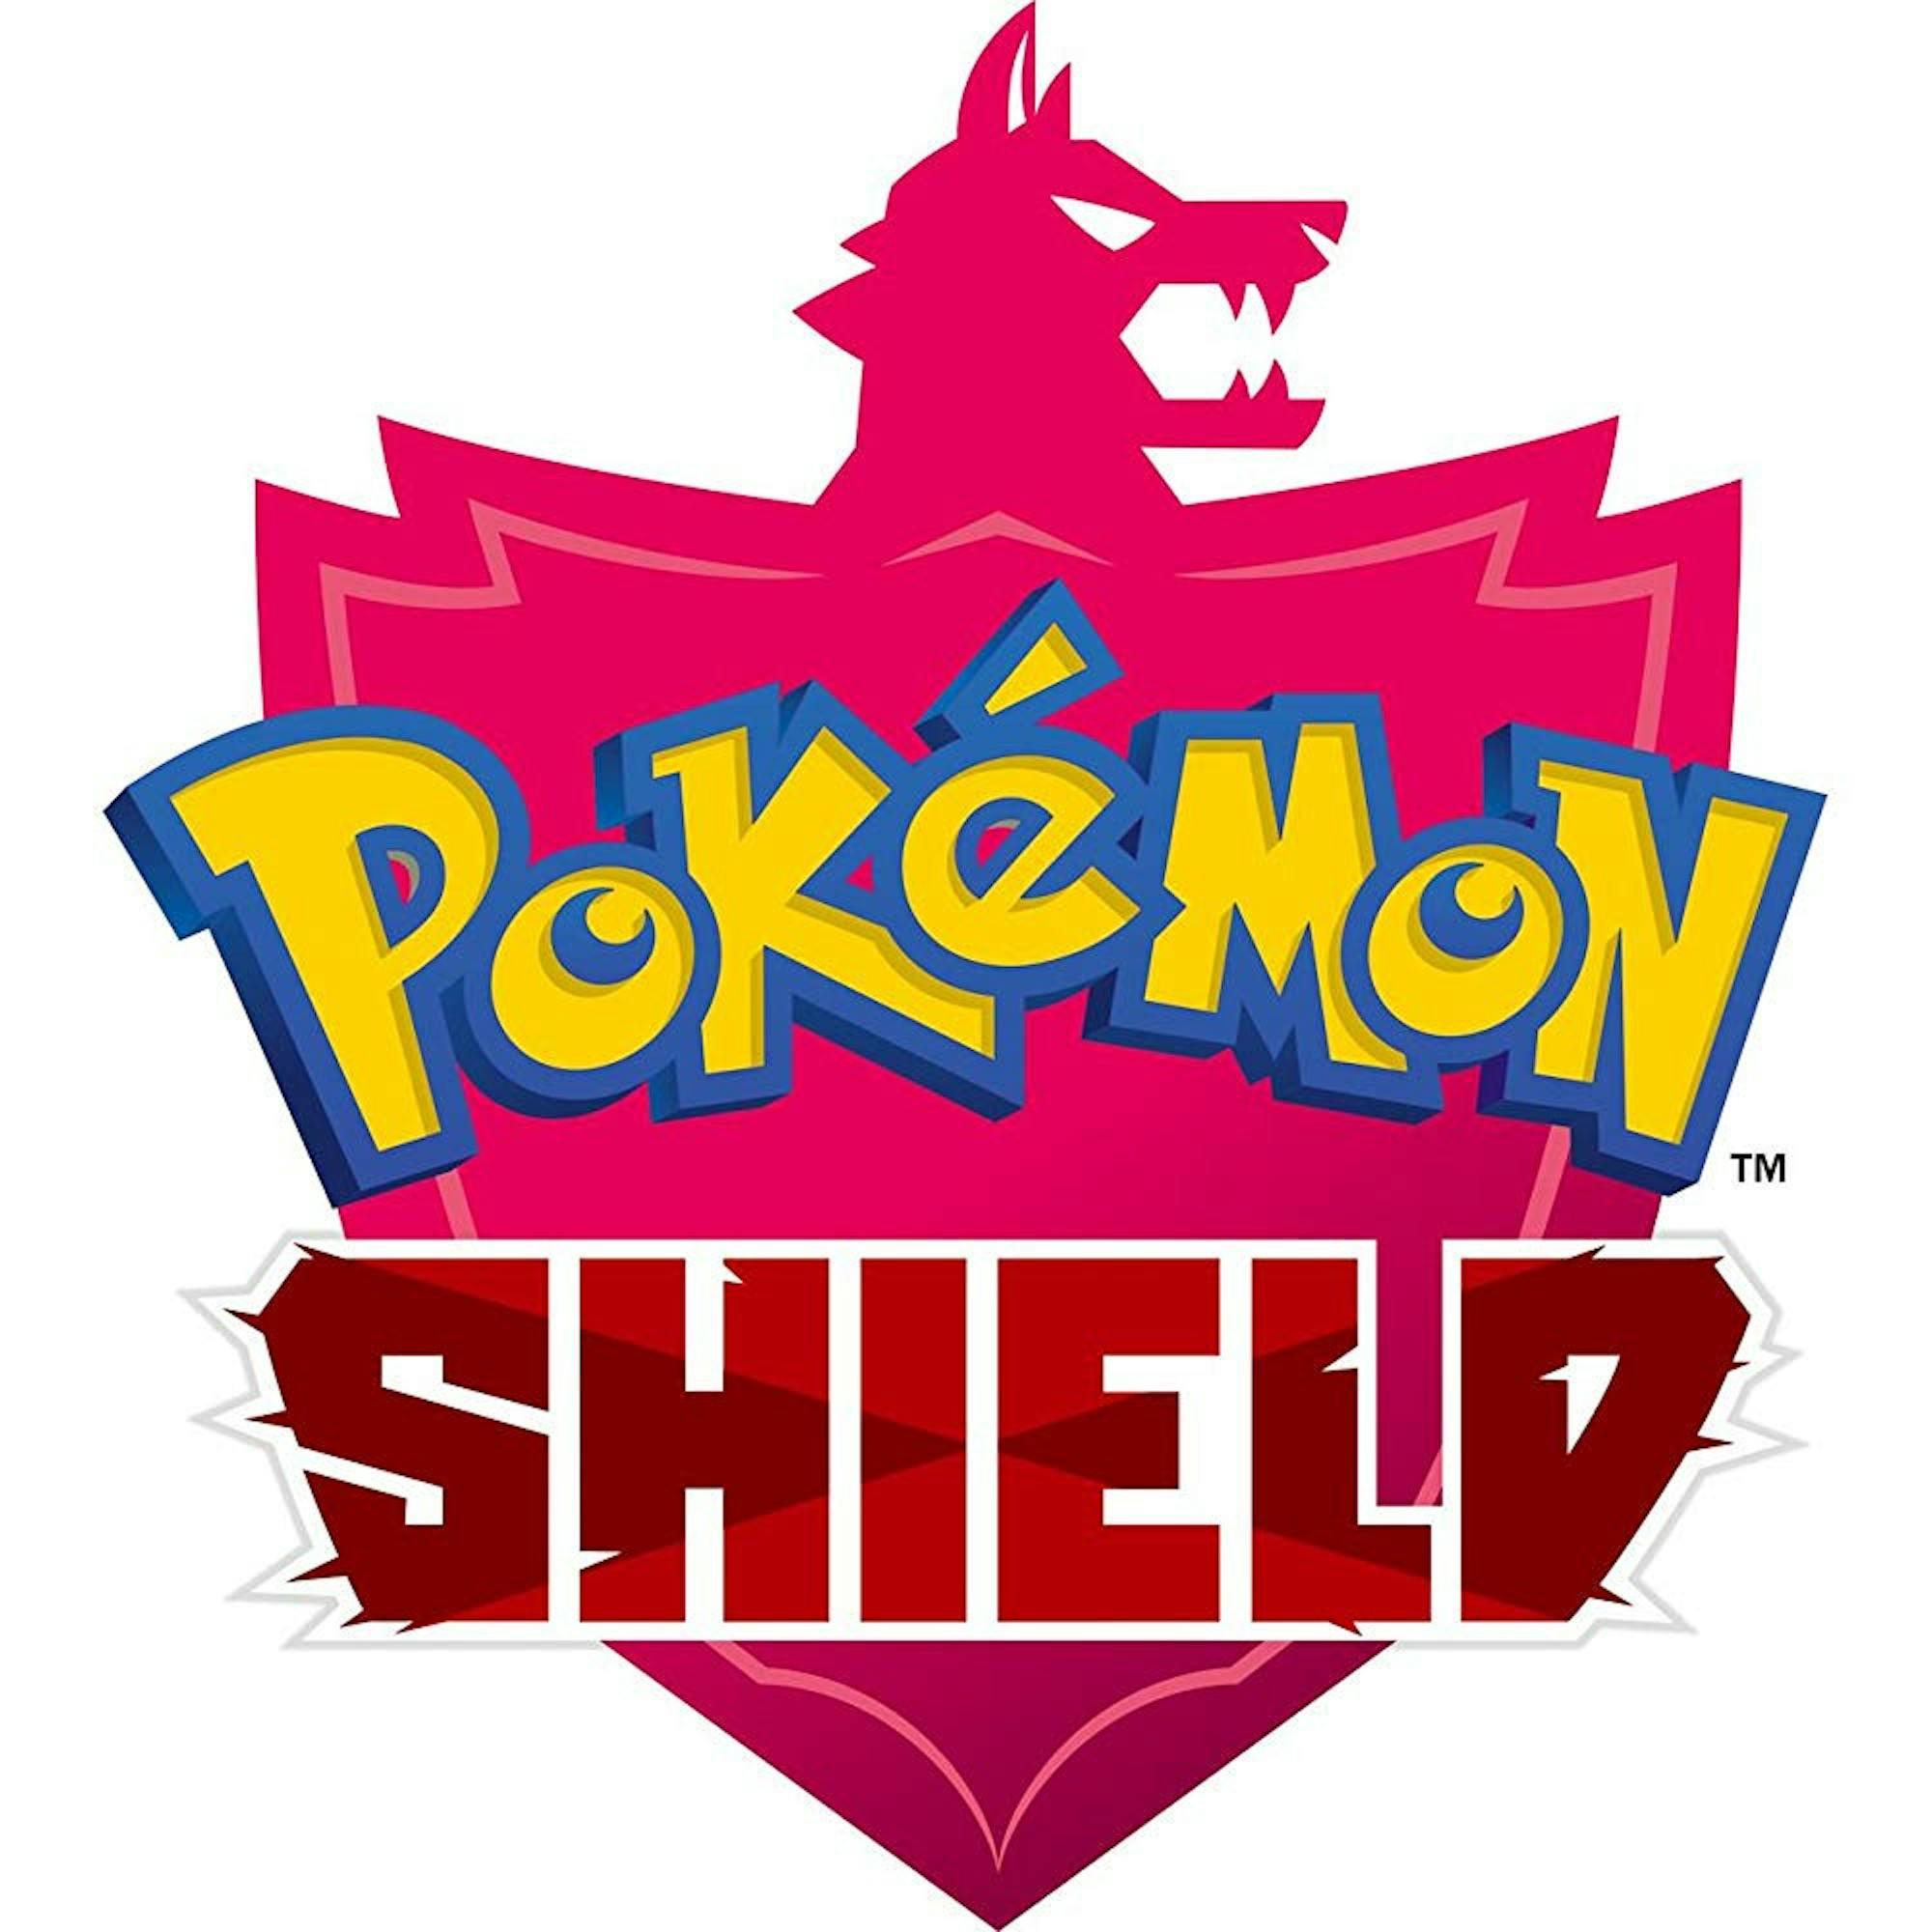 Pokémon Shield (Video Game 2019) - IMDb